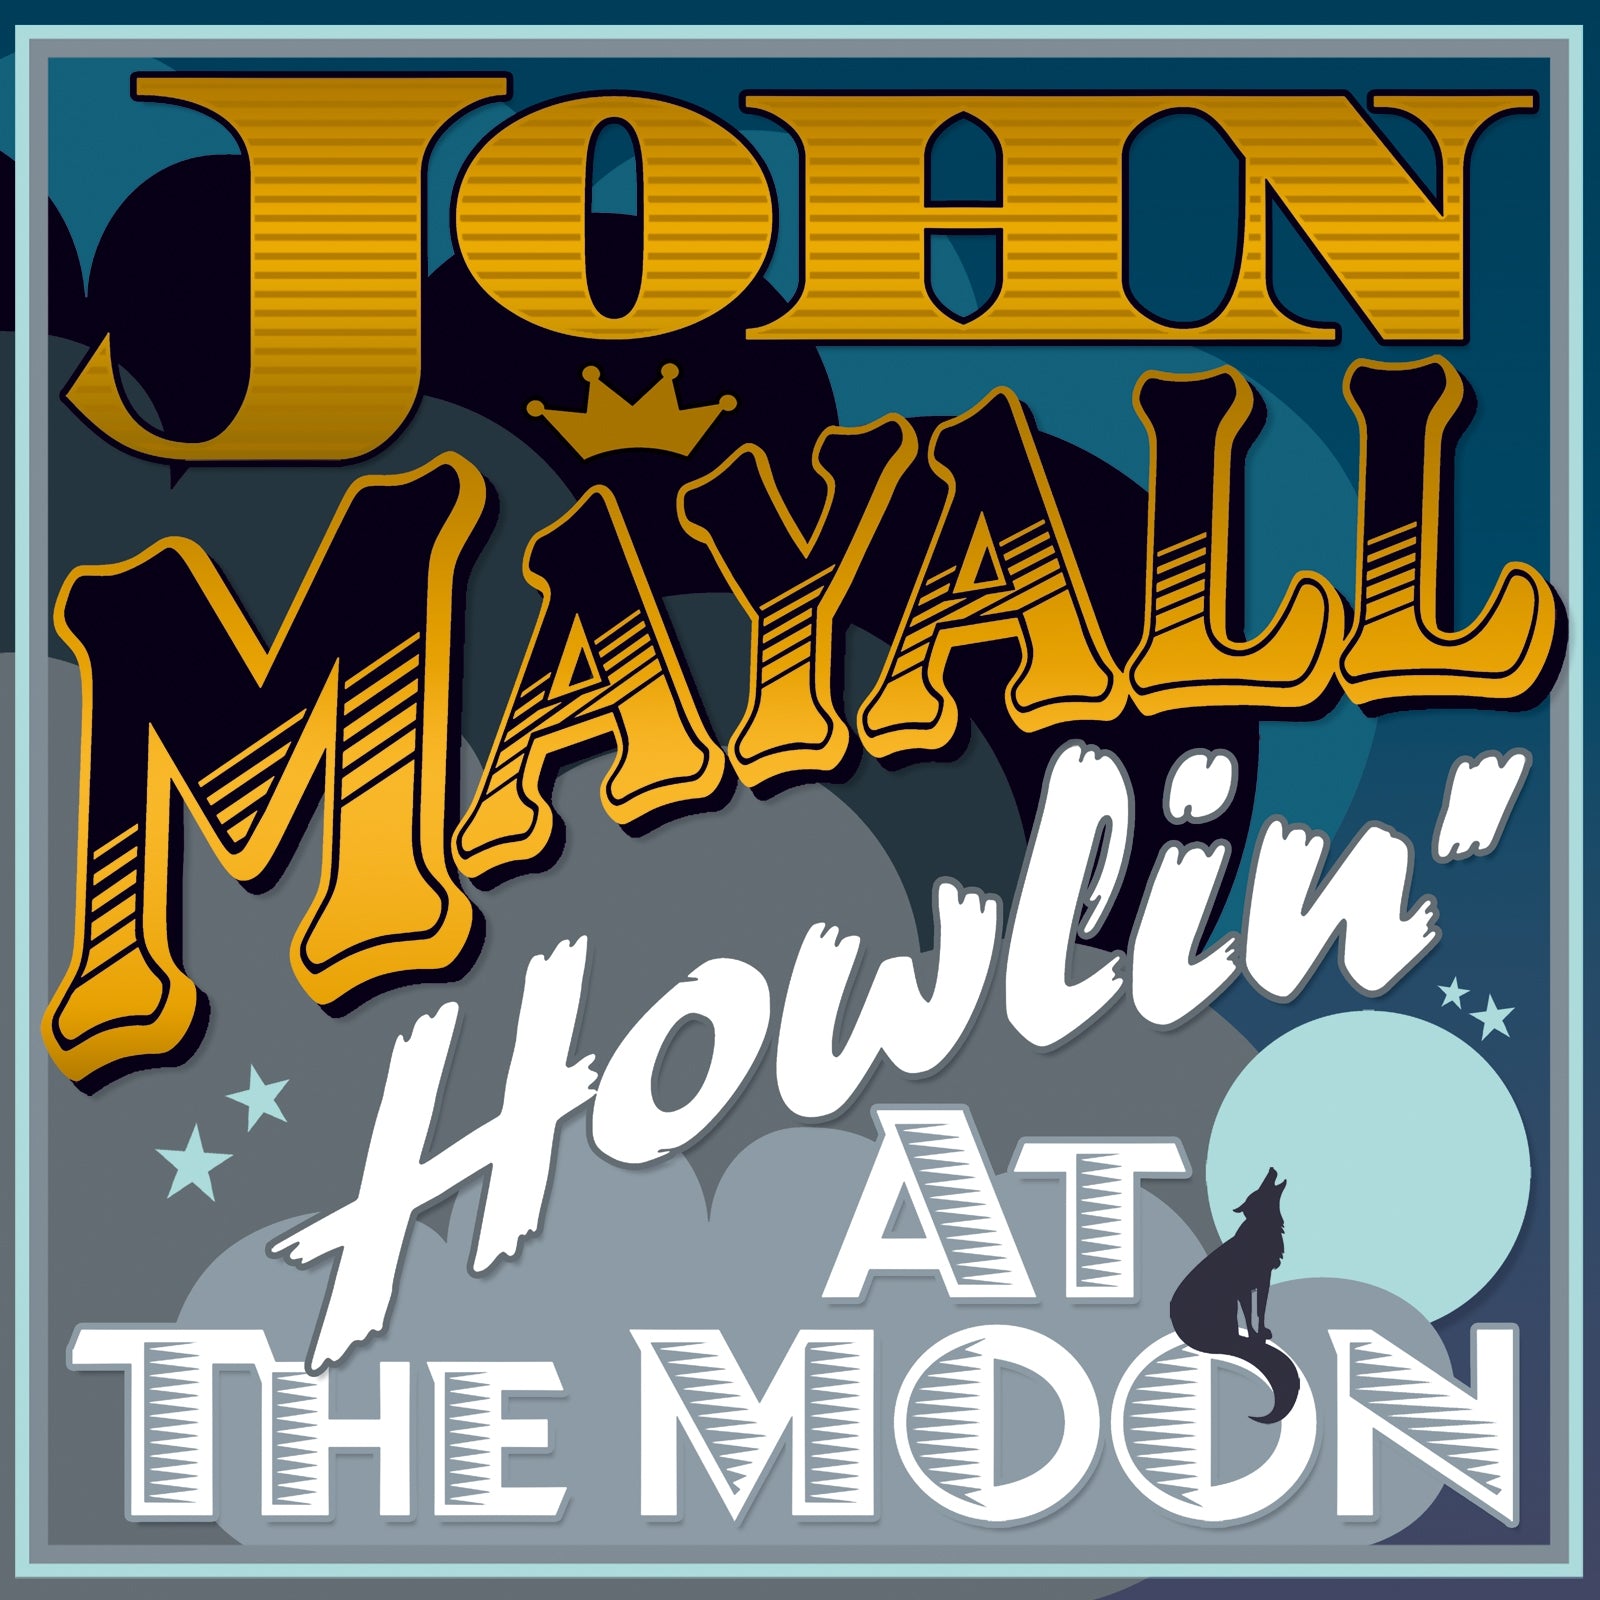 John Mayall - Howling at the Moon - Vinyl LP - Secret Records Limited